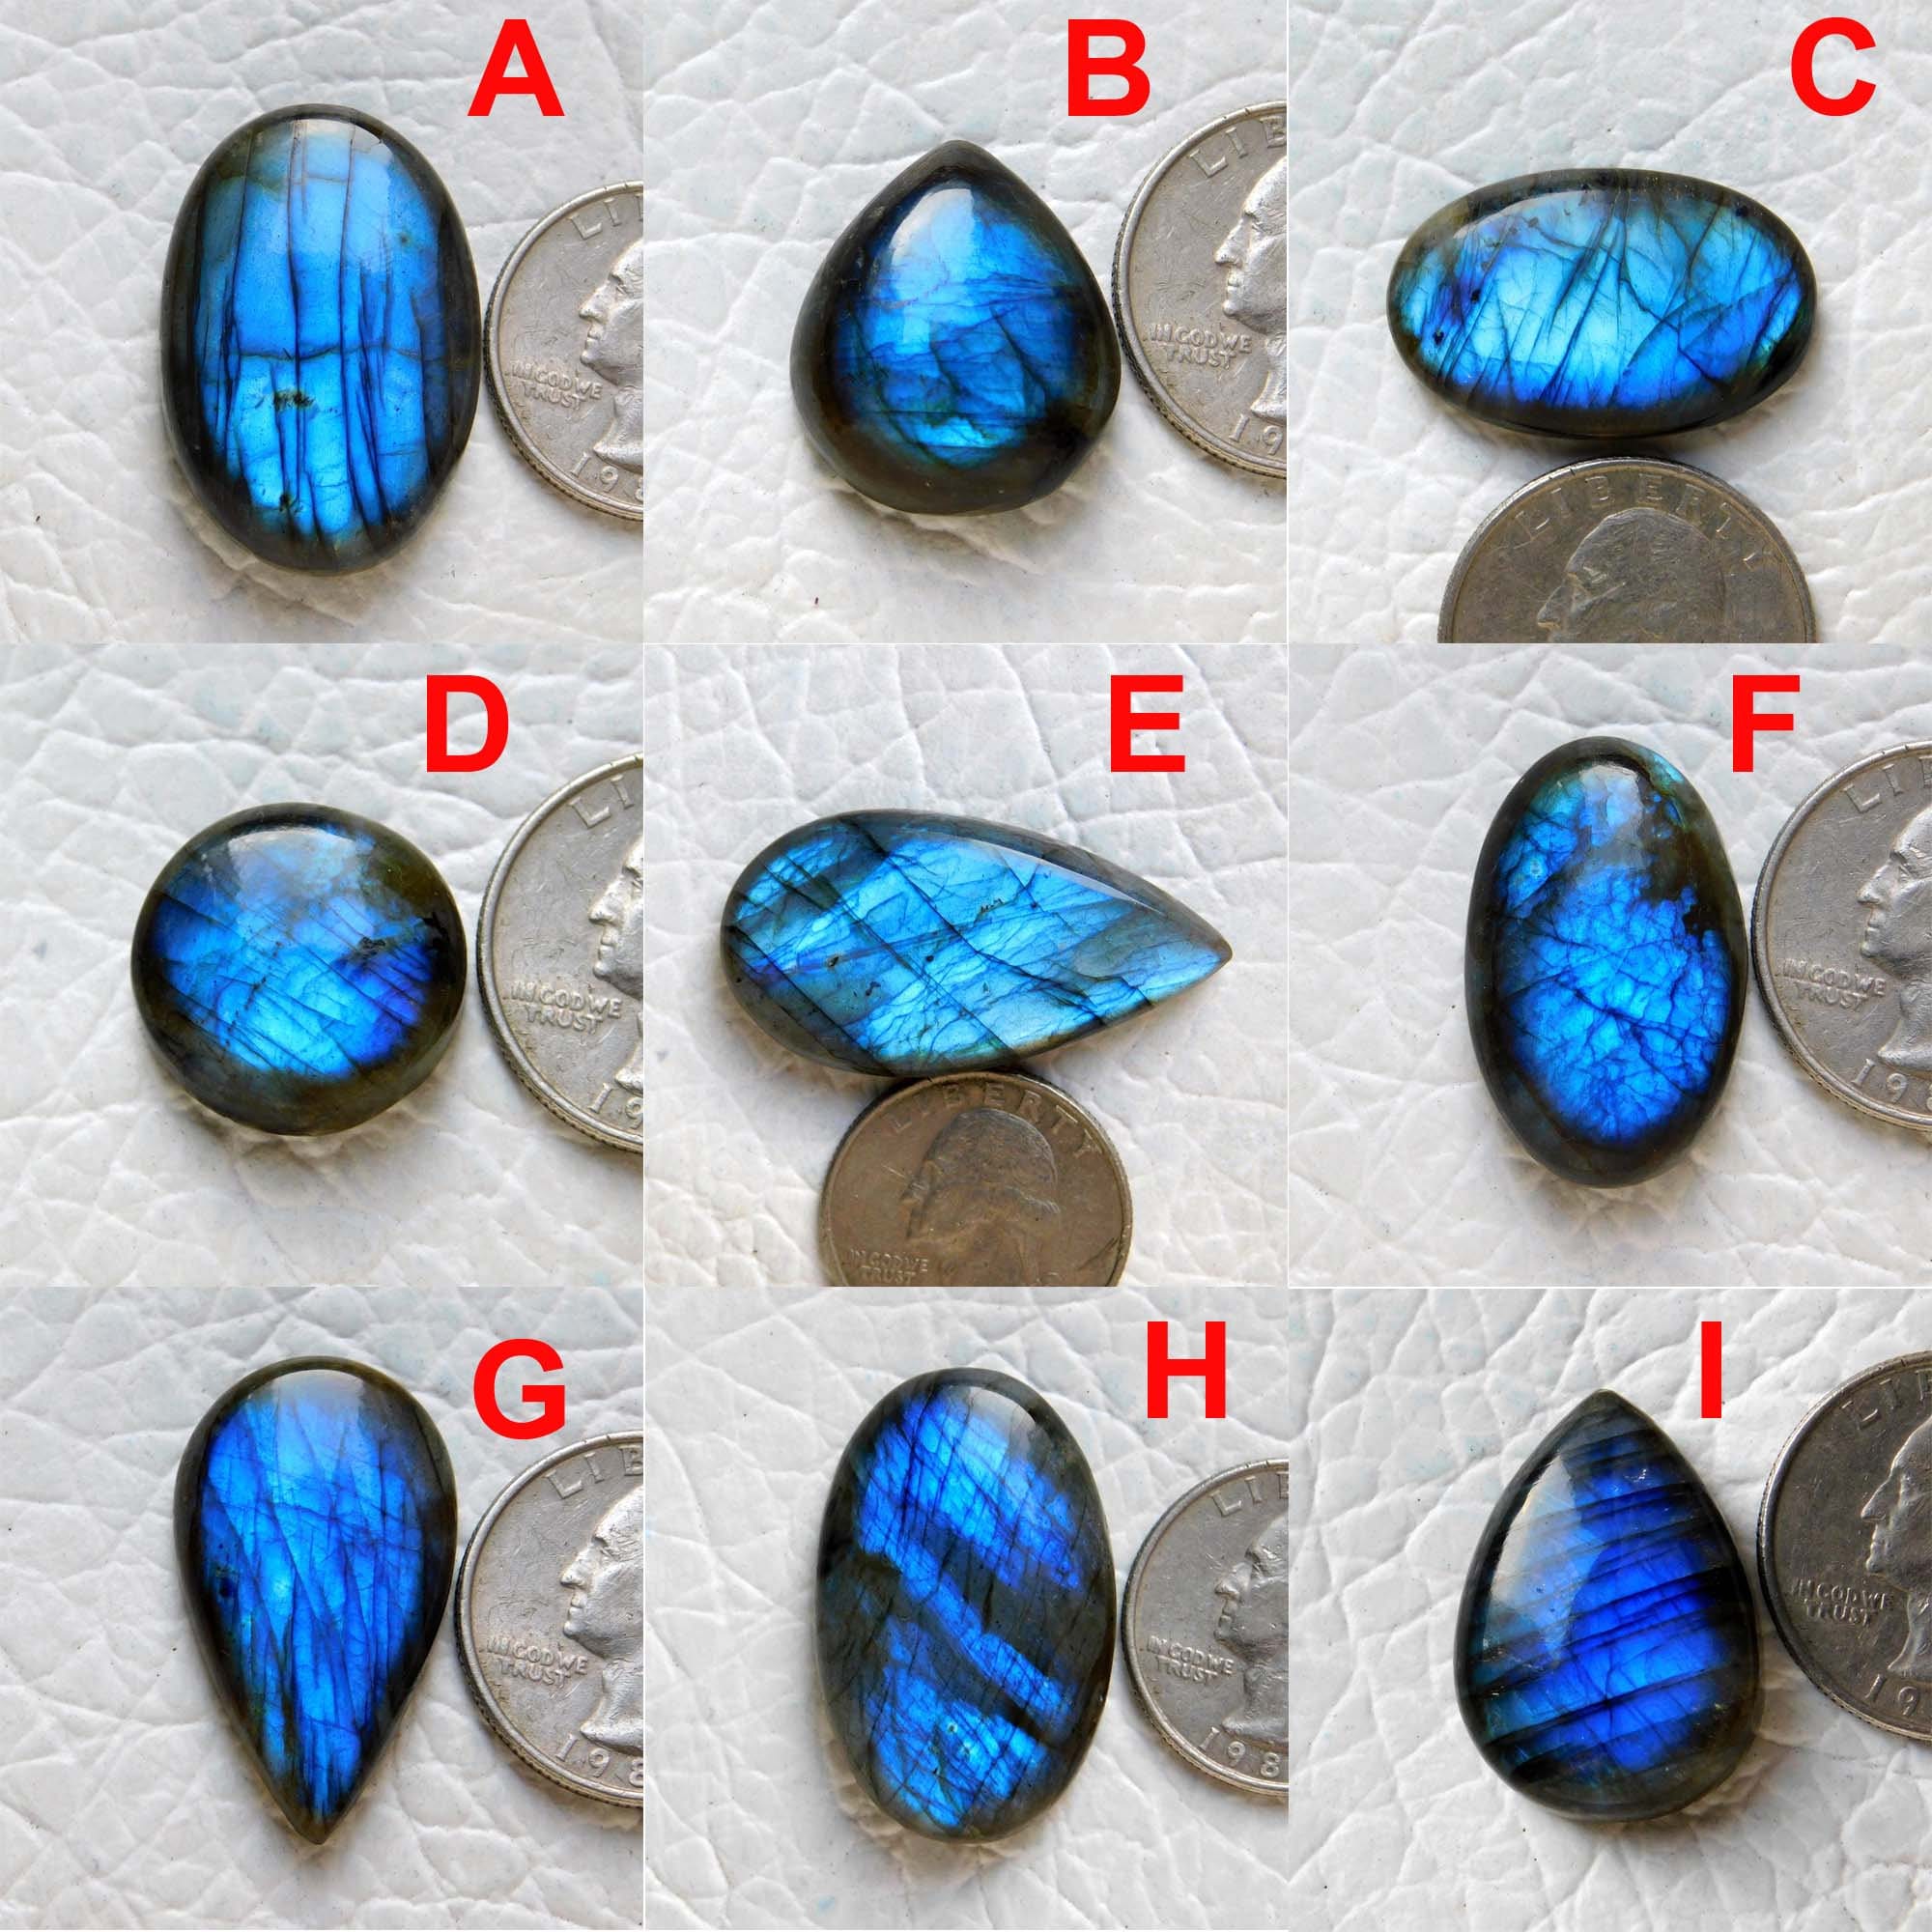 Blue Labradorite Cabochon Lot Aaa Quality Ring Pendant Artisan, Macrame Jewelry Supplies Labradorite Gemstone Stone